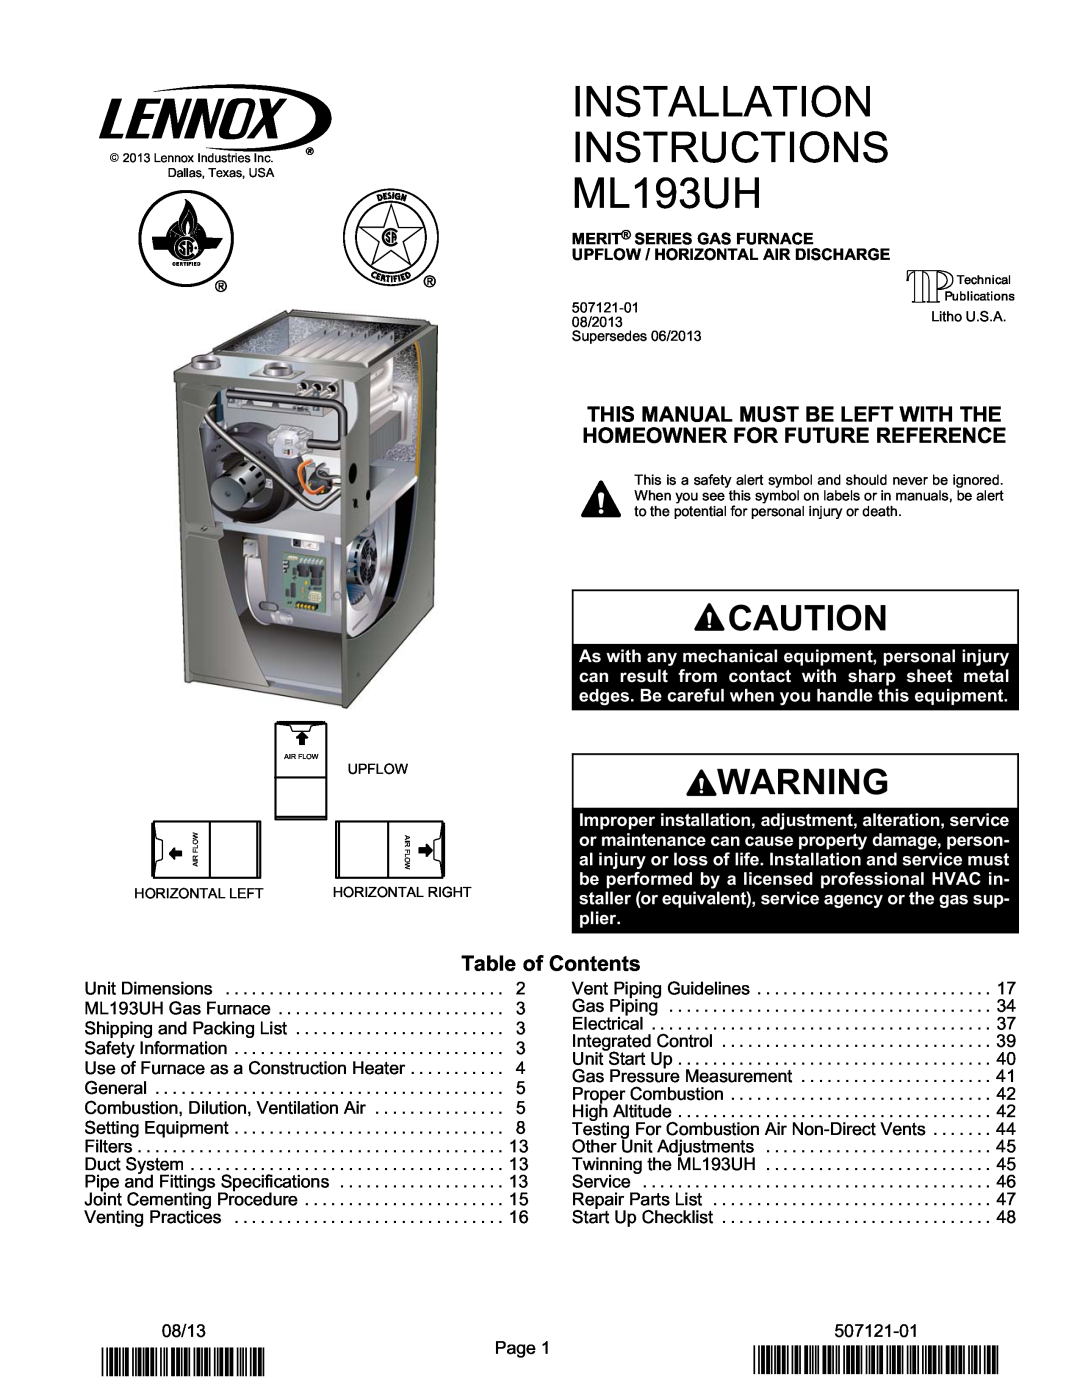 Lennox International Inc Lennox Merit Series Gas Furnace Upflow/Horizontal Air Discharge installation instructions 2P0813 